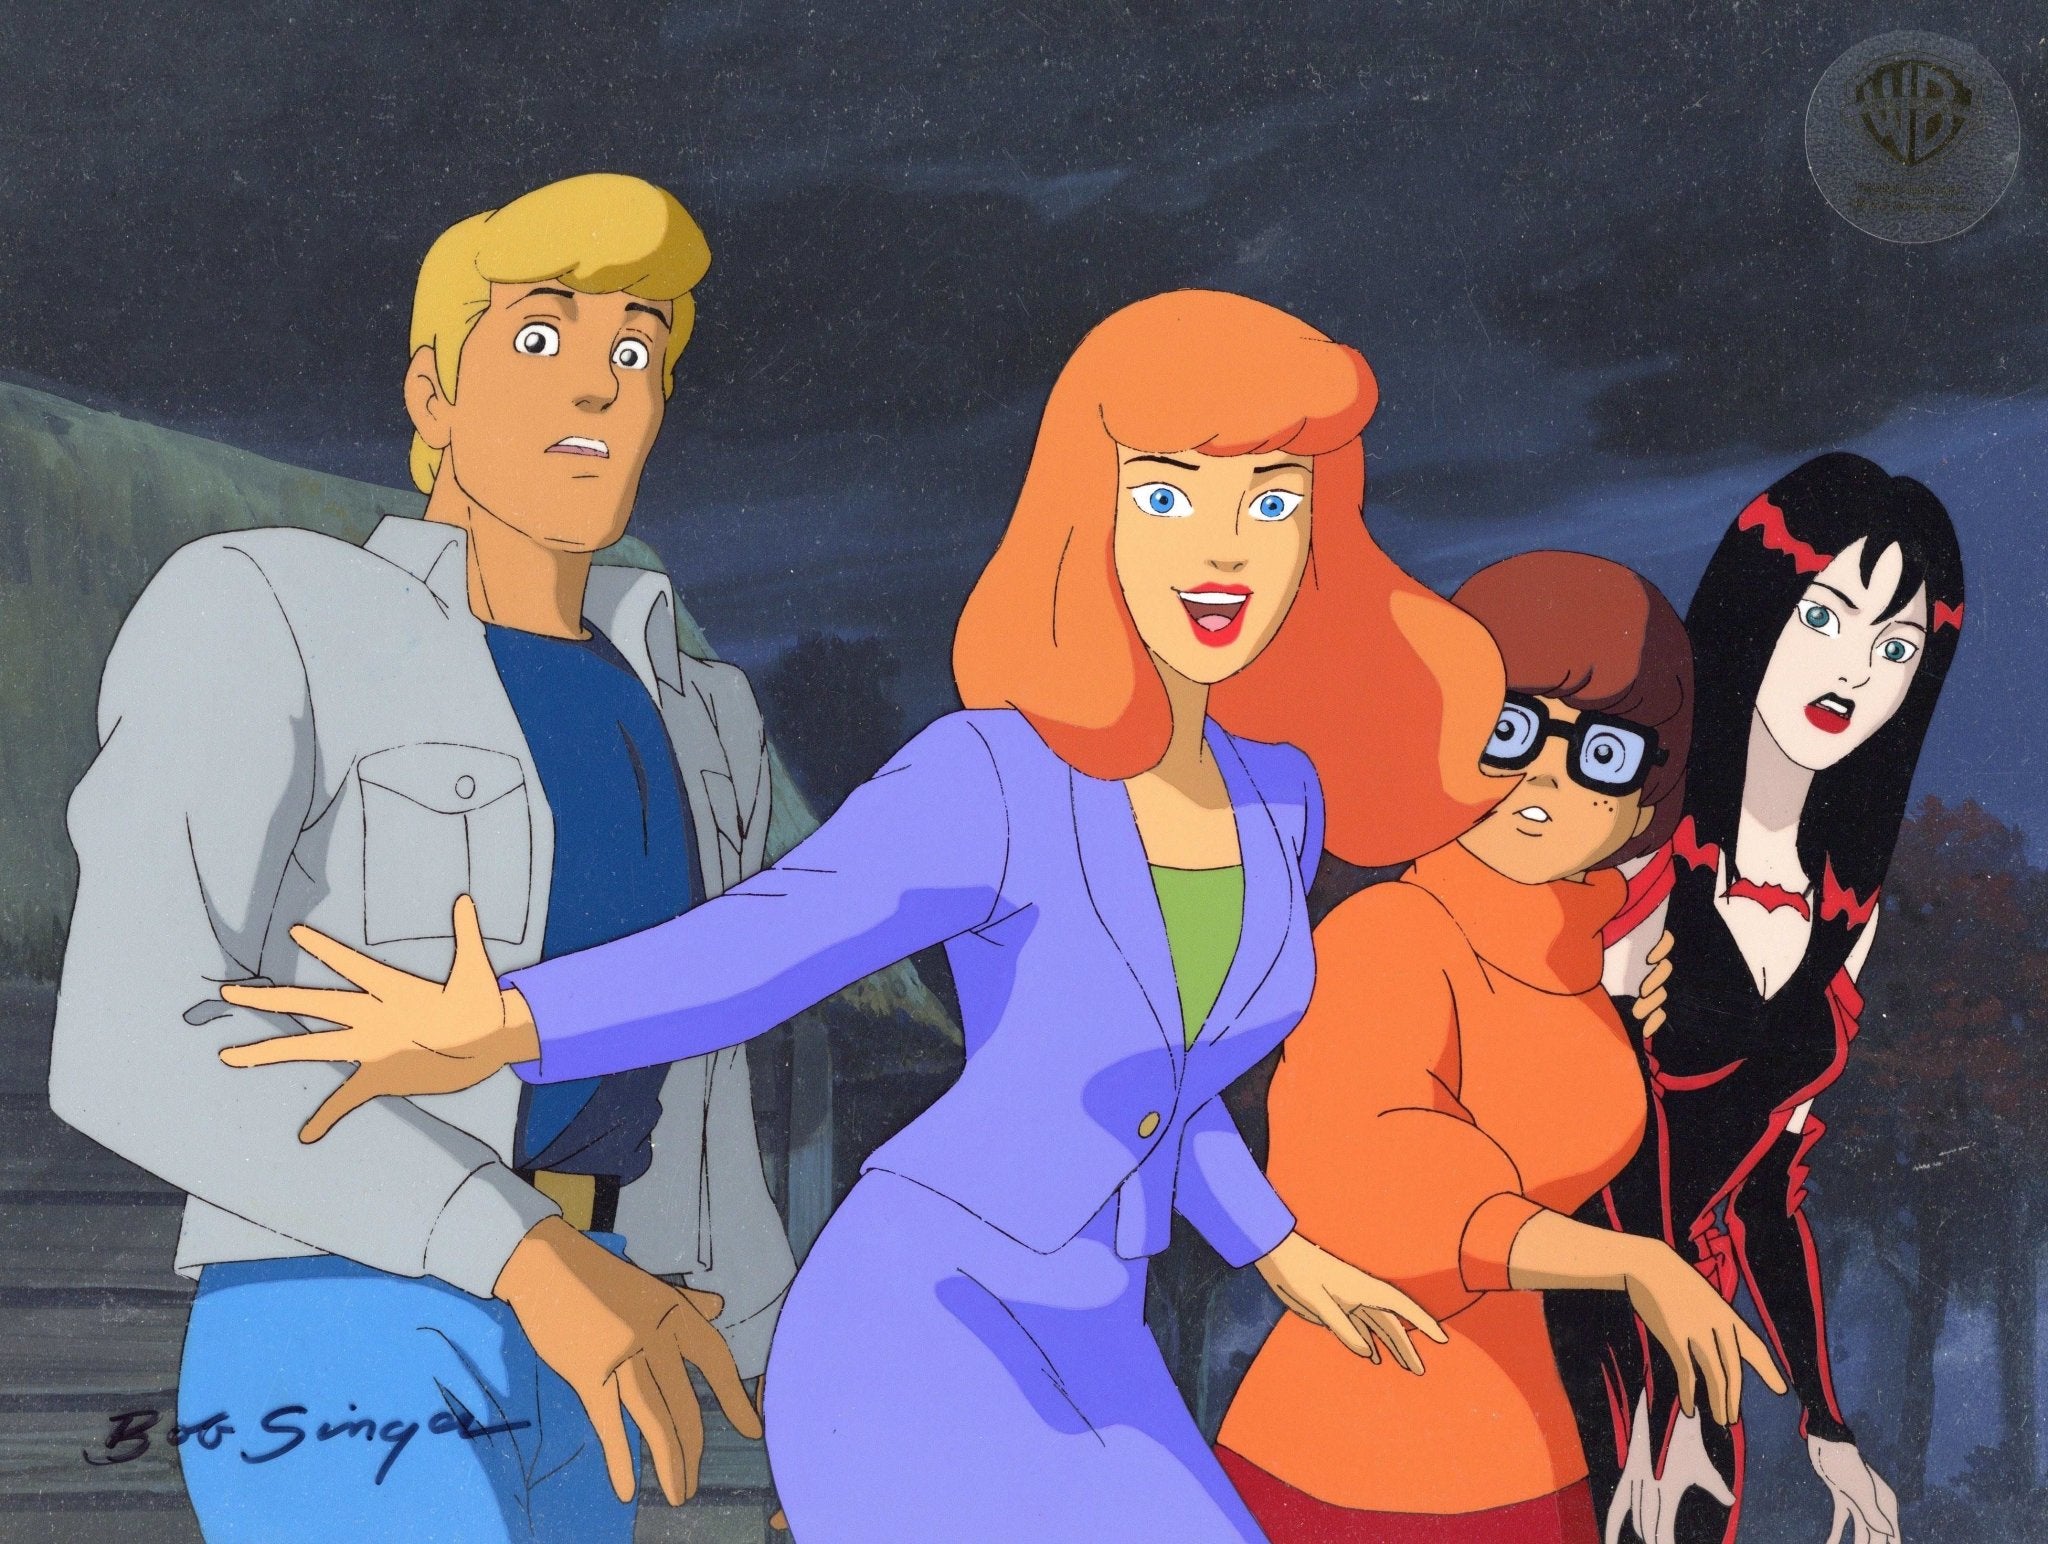 Daphne And Velma From Scooby Doo Origin Story Movie